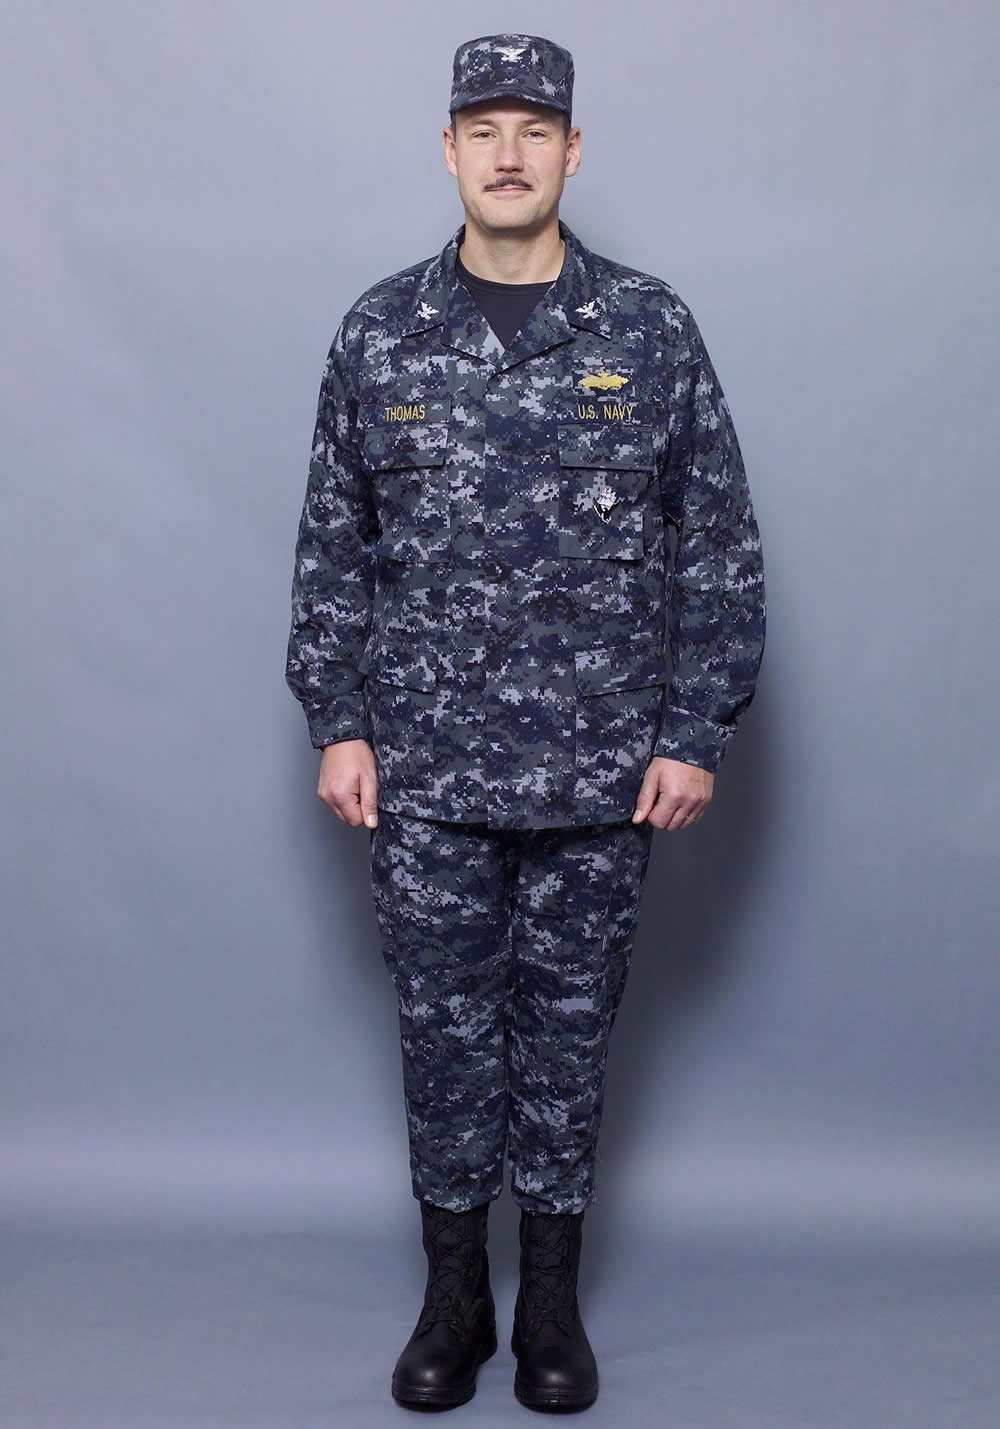 Nwu Navy Uniform 55